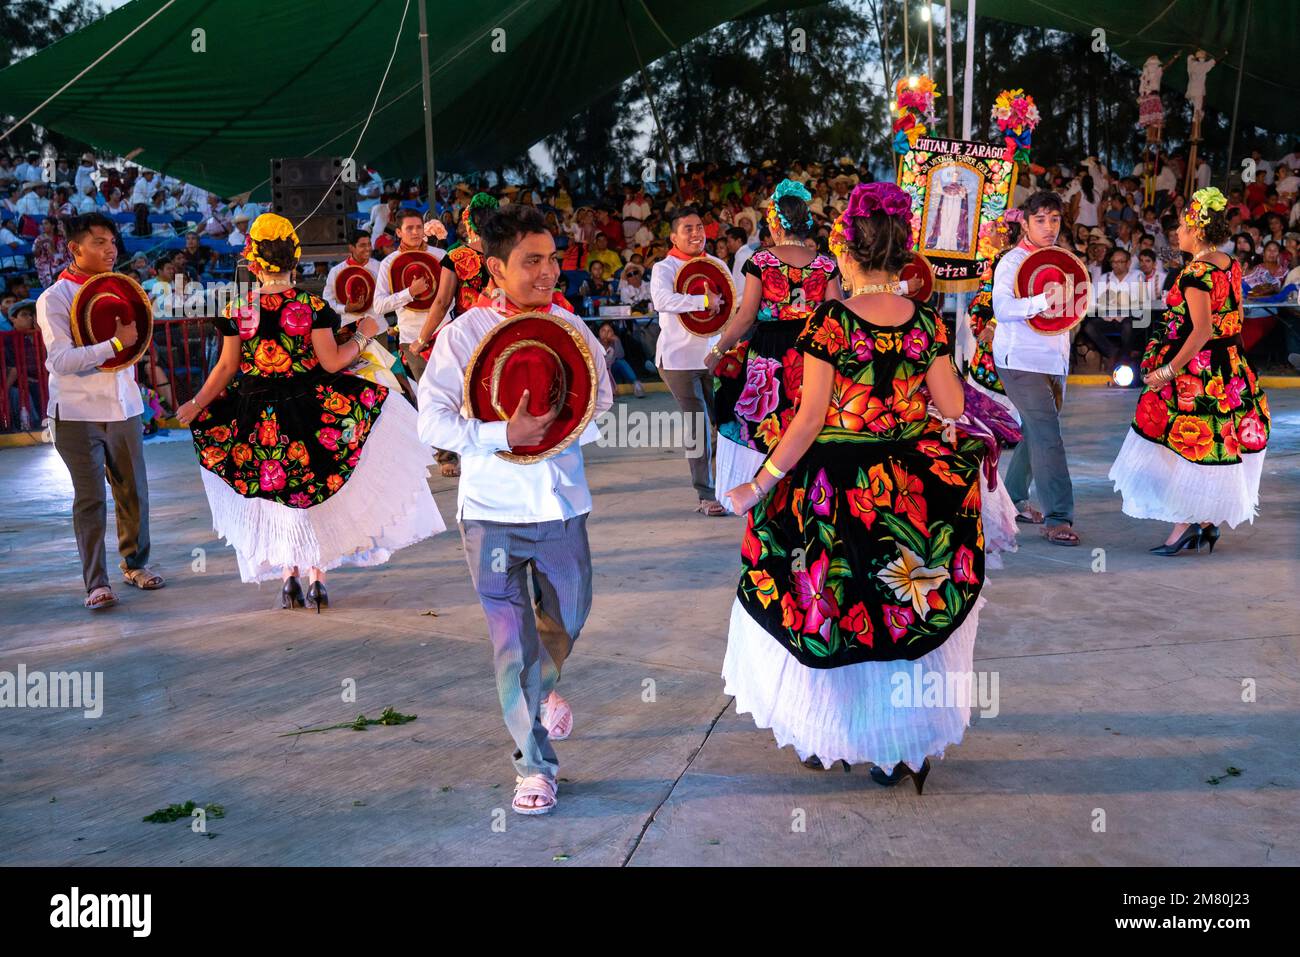 Dancers from Juchitan de Zaragoza perform a traditional dance at the Guelaguetza in San Antonino Castillo Velasco, Oaxaca, Mexico.  Their costumes are Stock Photo